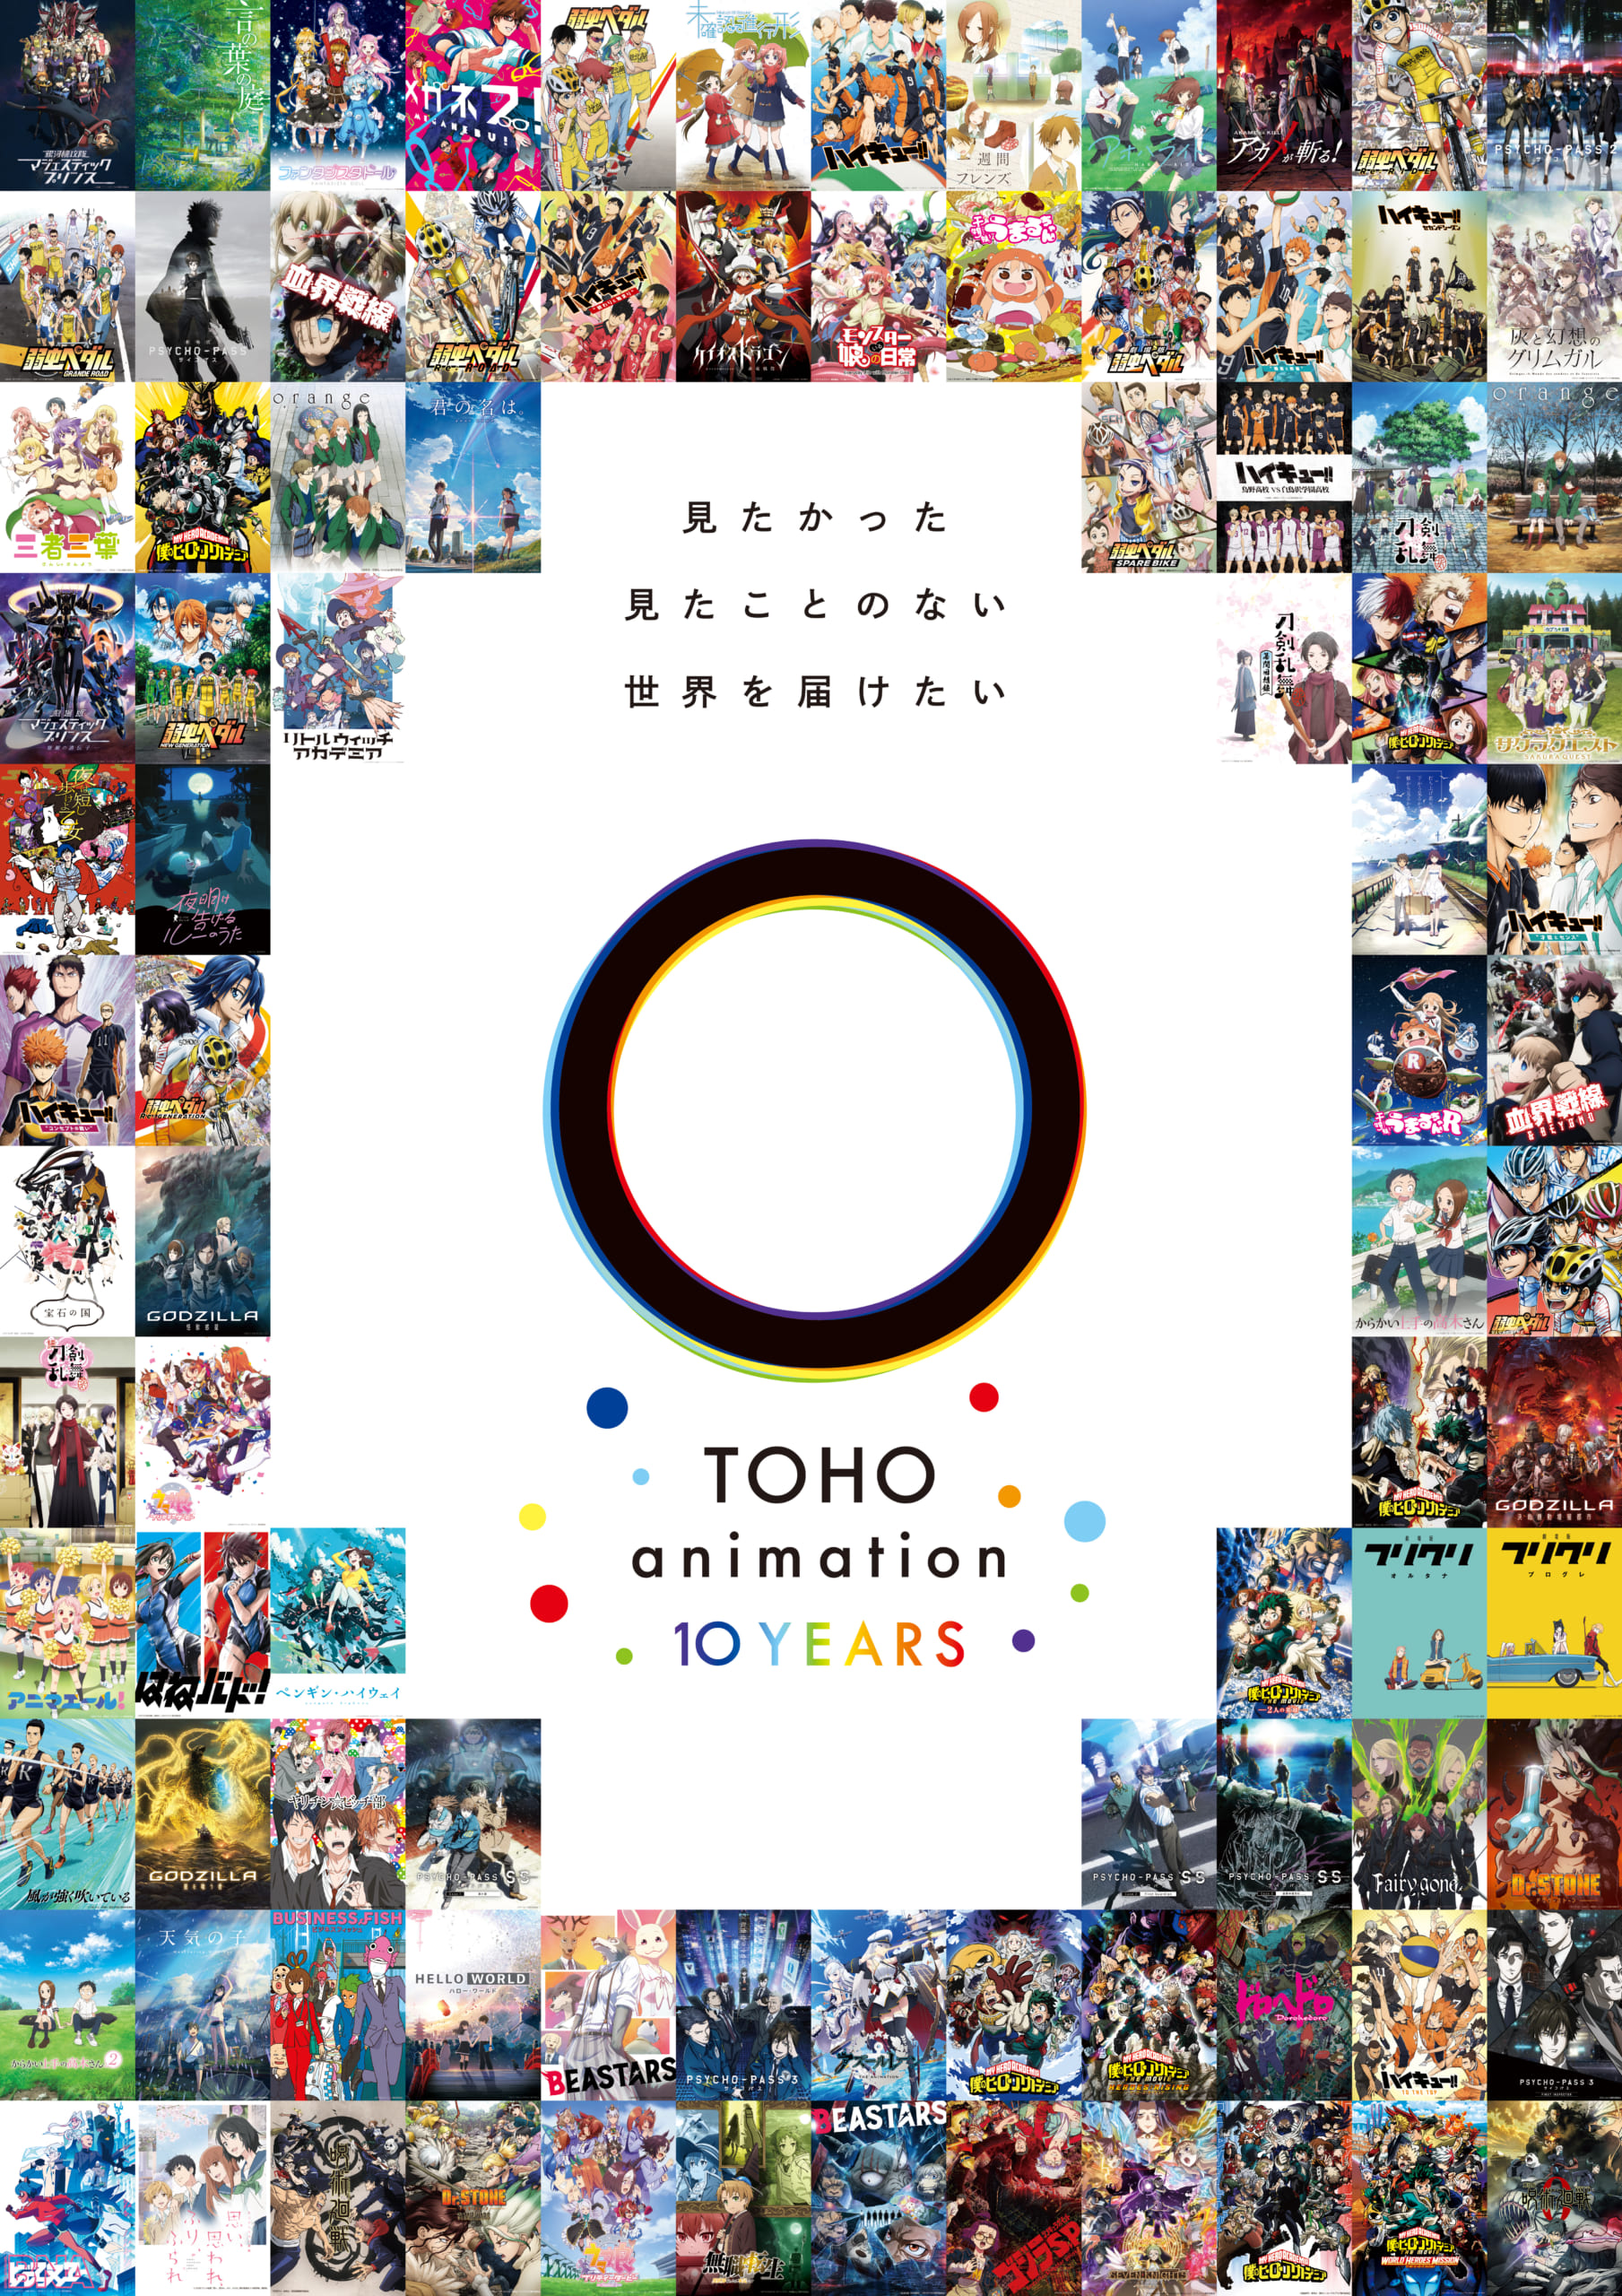 「TOHO animation 10周年プロジェクト」名作が集結したPV公開&映画館で神回上映！